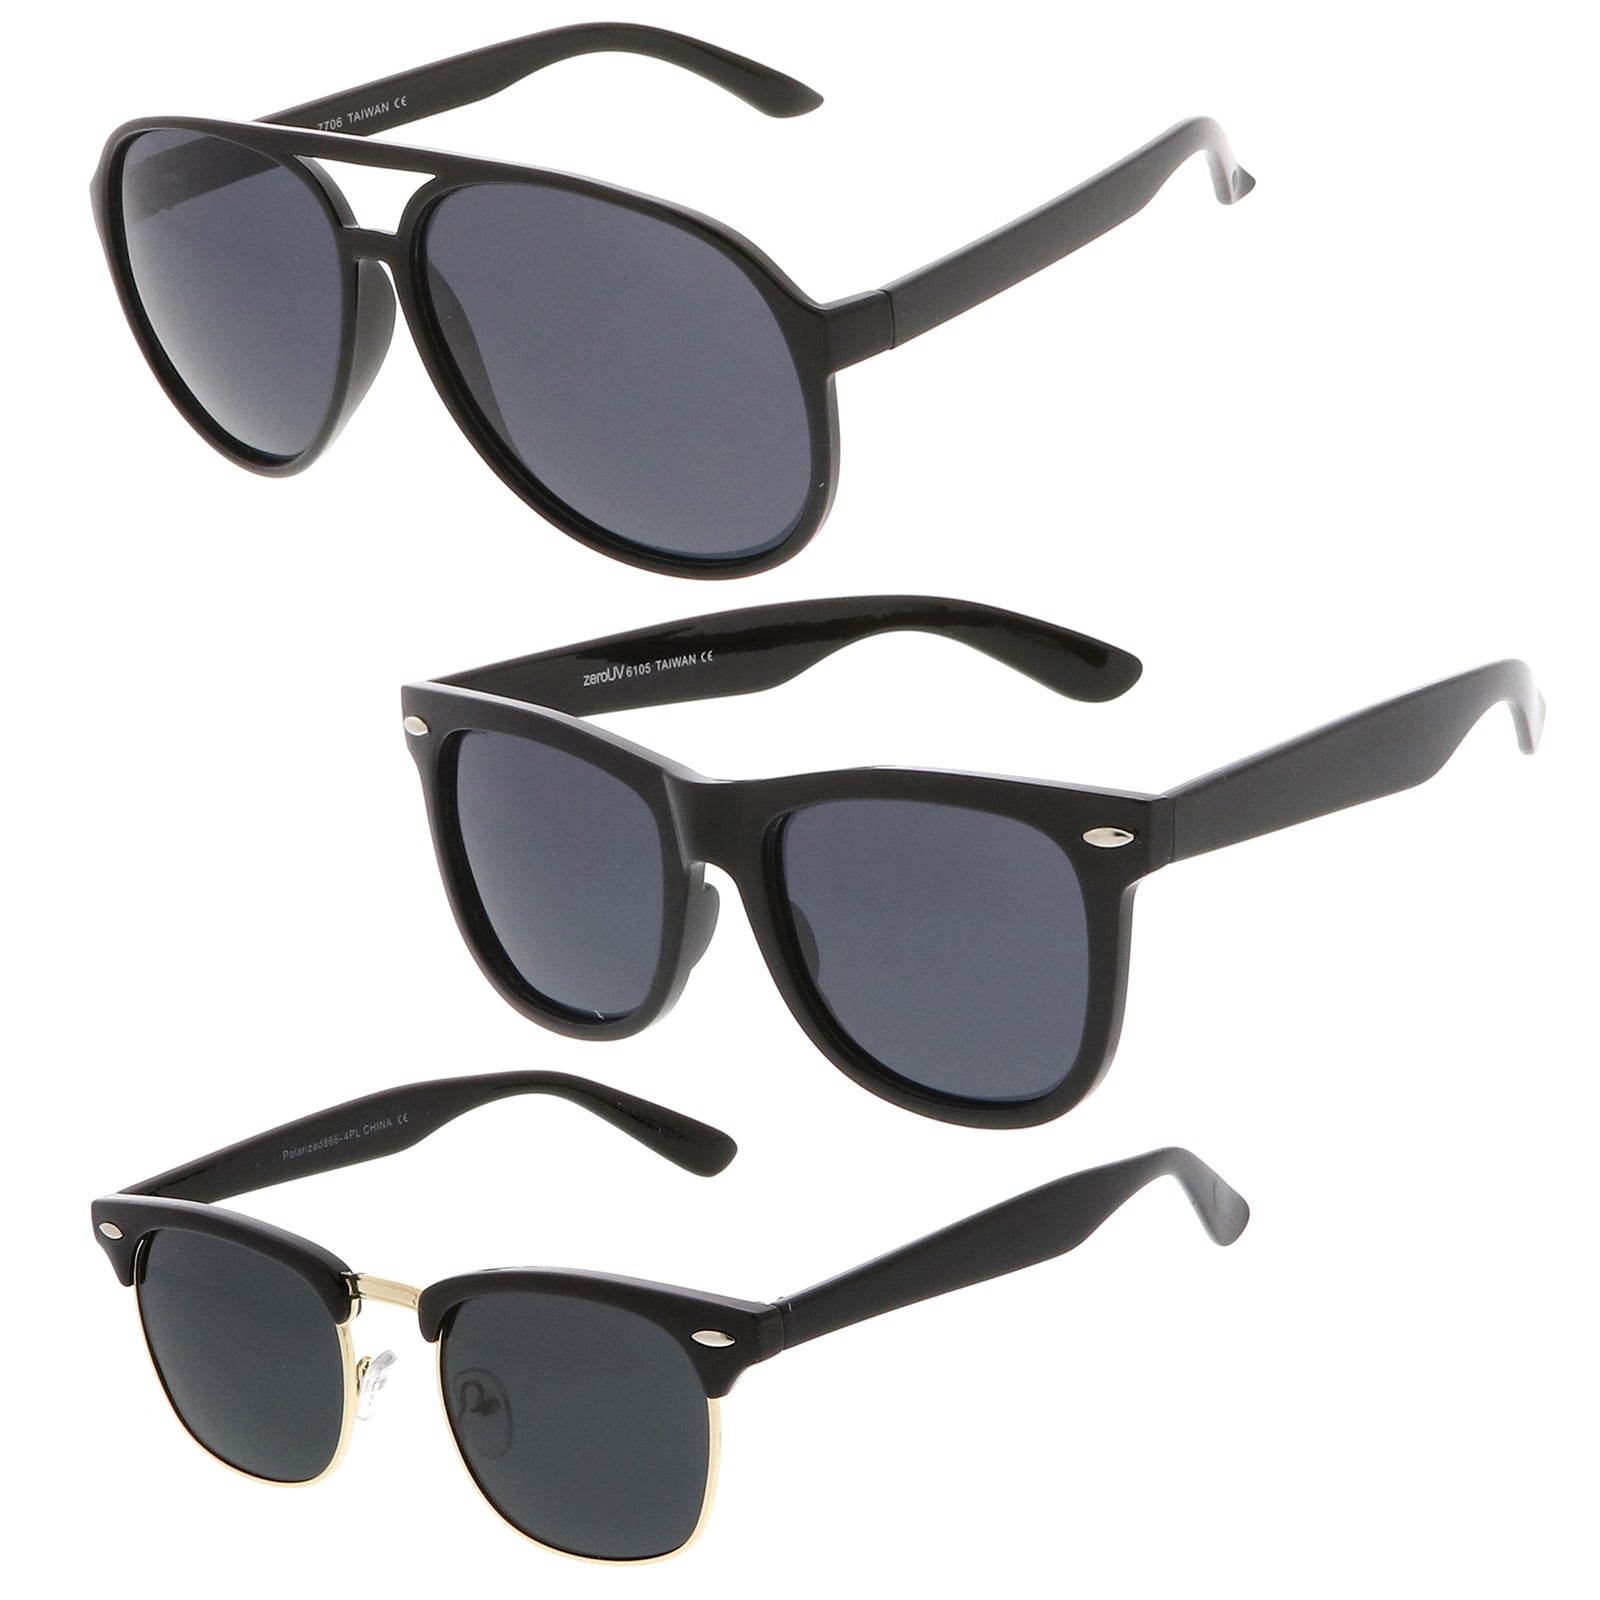 Designer Pilot Sunglasses For Men 5A L Z1586E 1.1 Evidence Metal Eyewear  With Acetate 100% UVA/UVB Toric Lenses, Dust Bag, And Fendave Box From  Fendave, $59.11